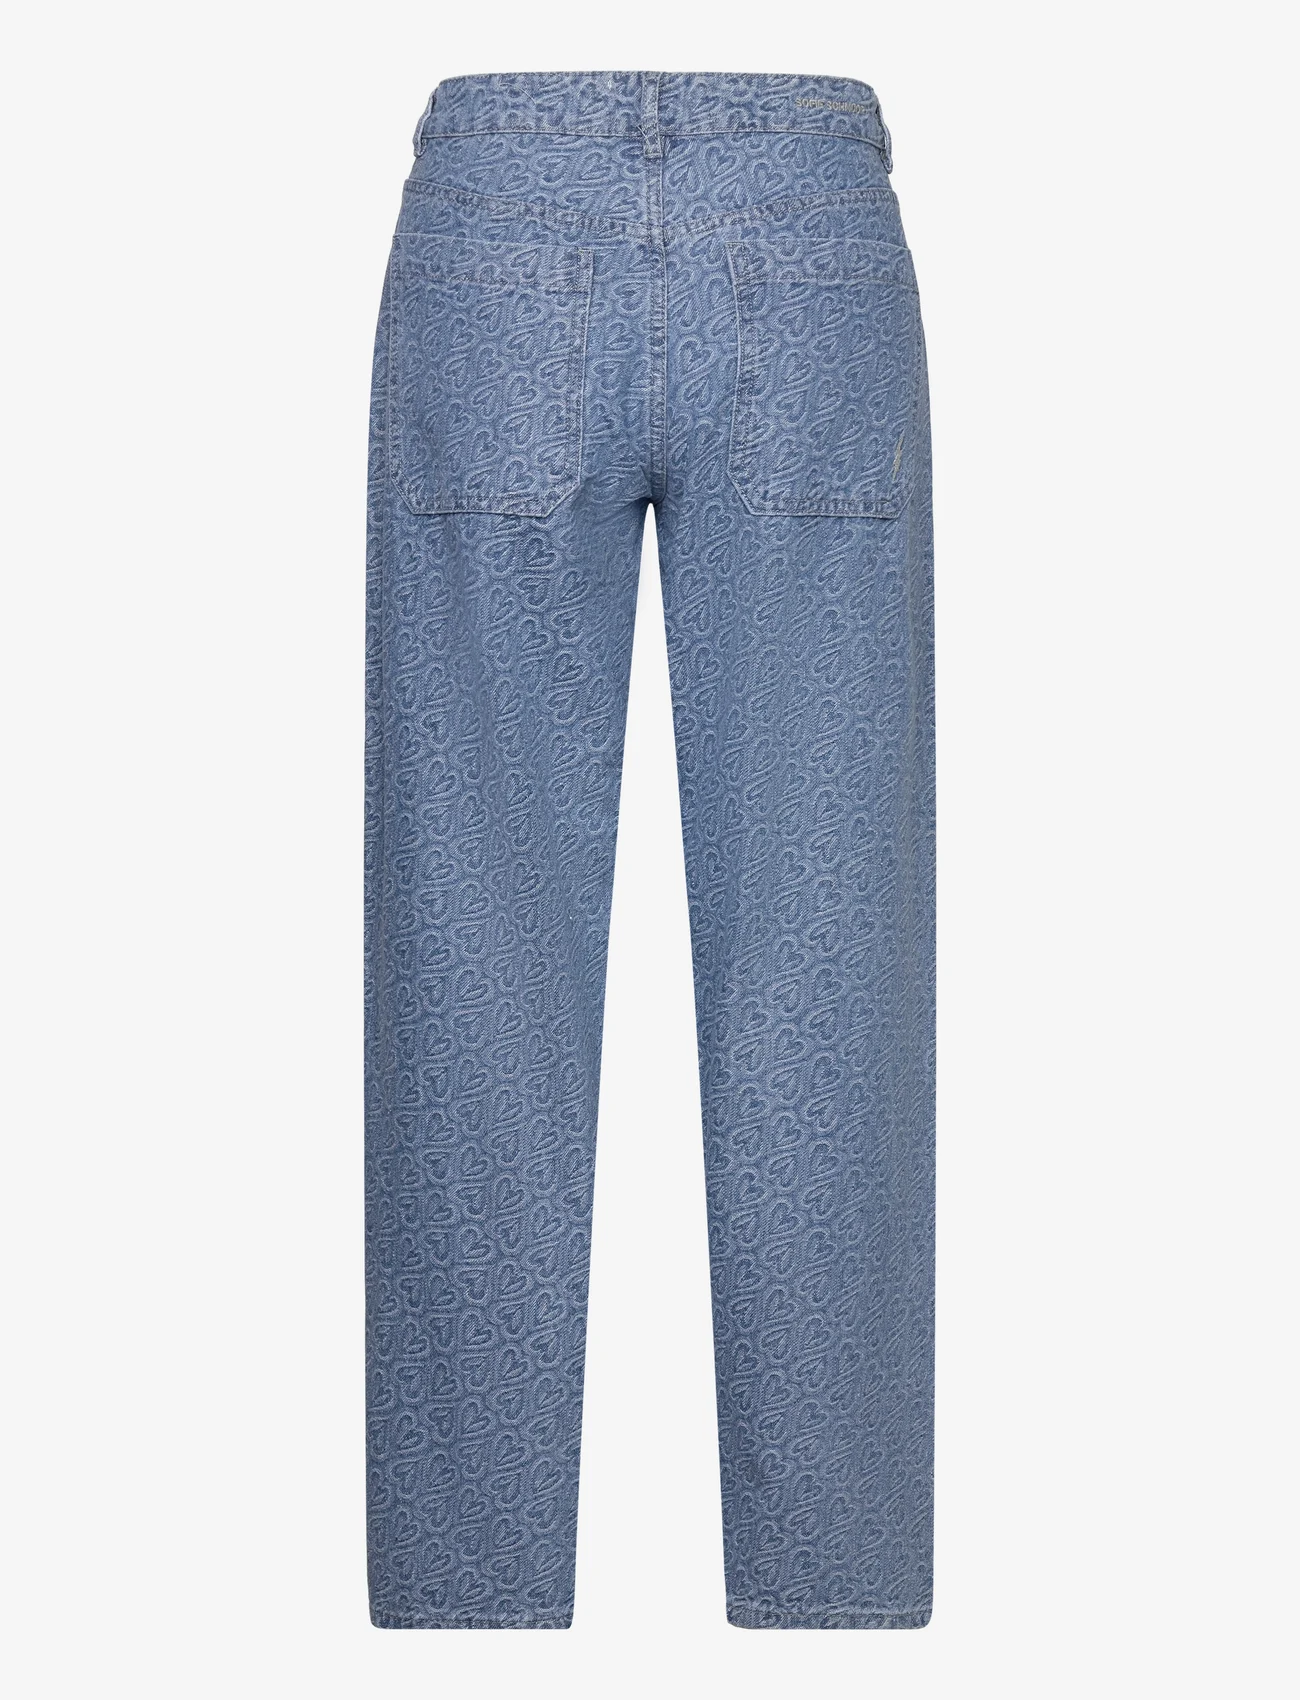 Sofie Schnoor - Trousers - brede jeans - light denim blue - 1